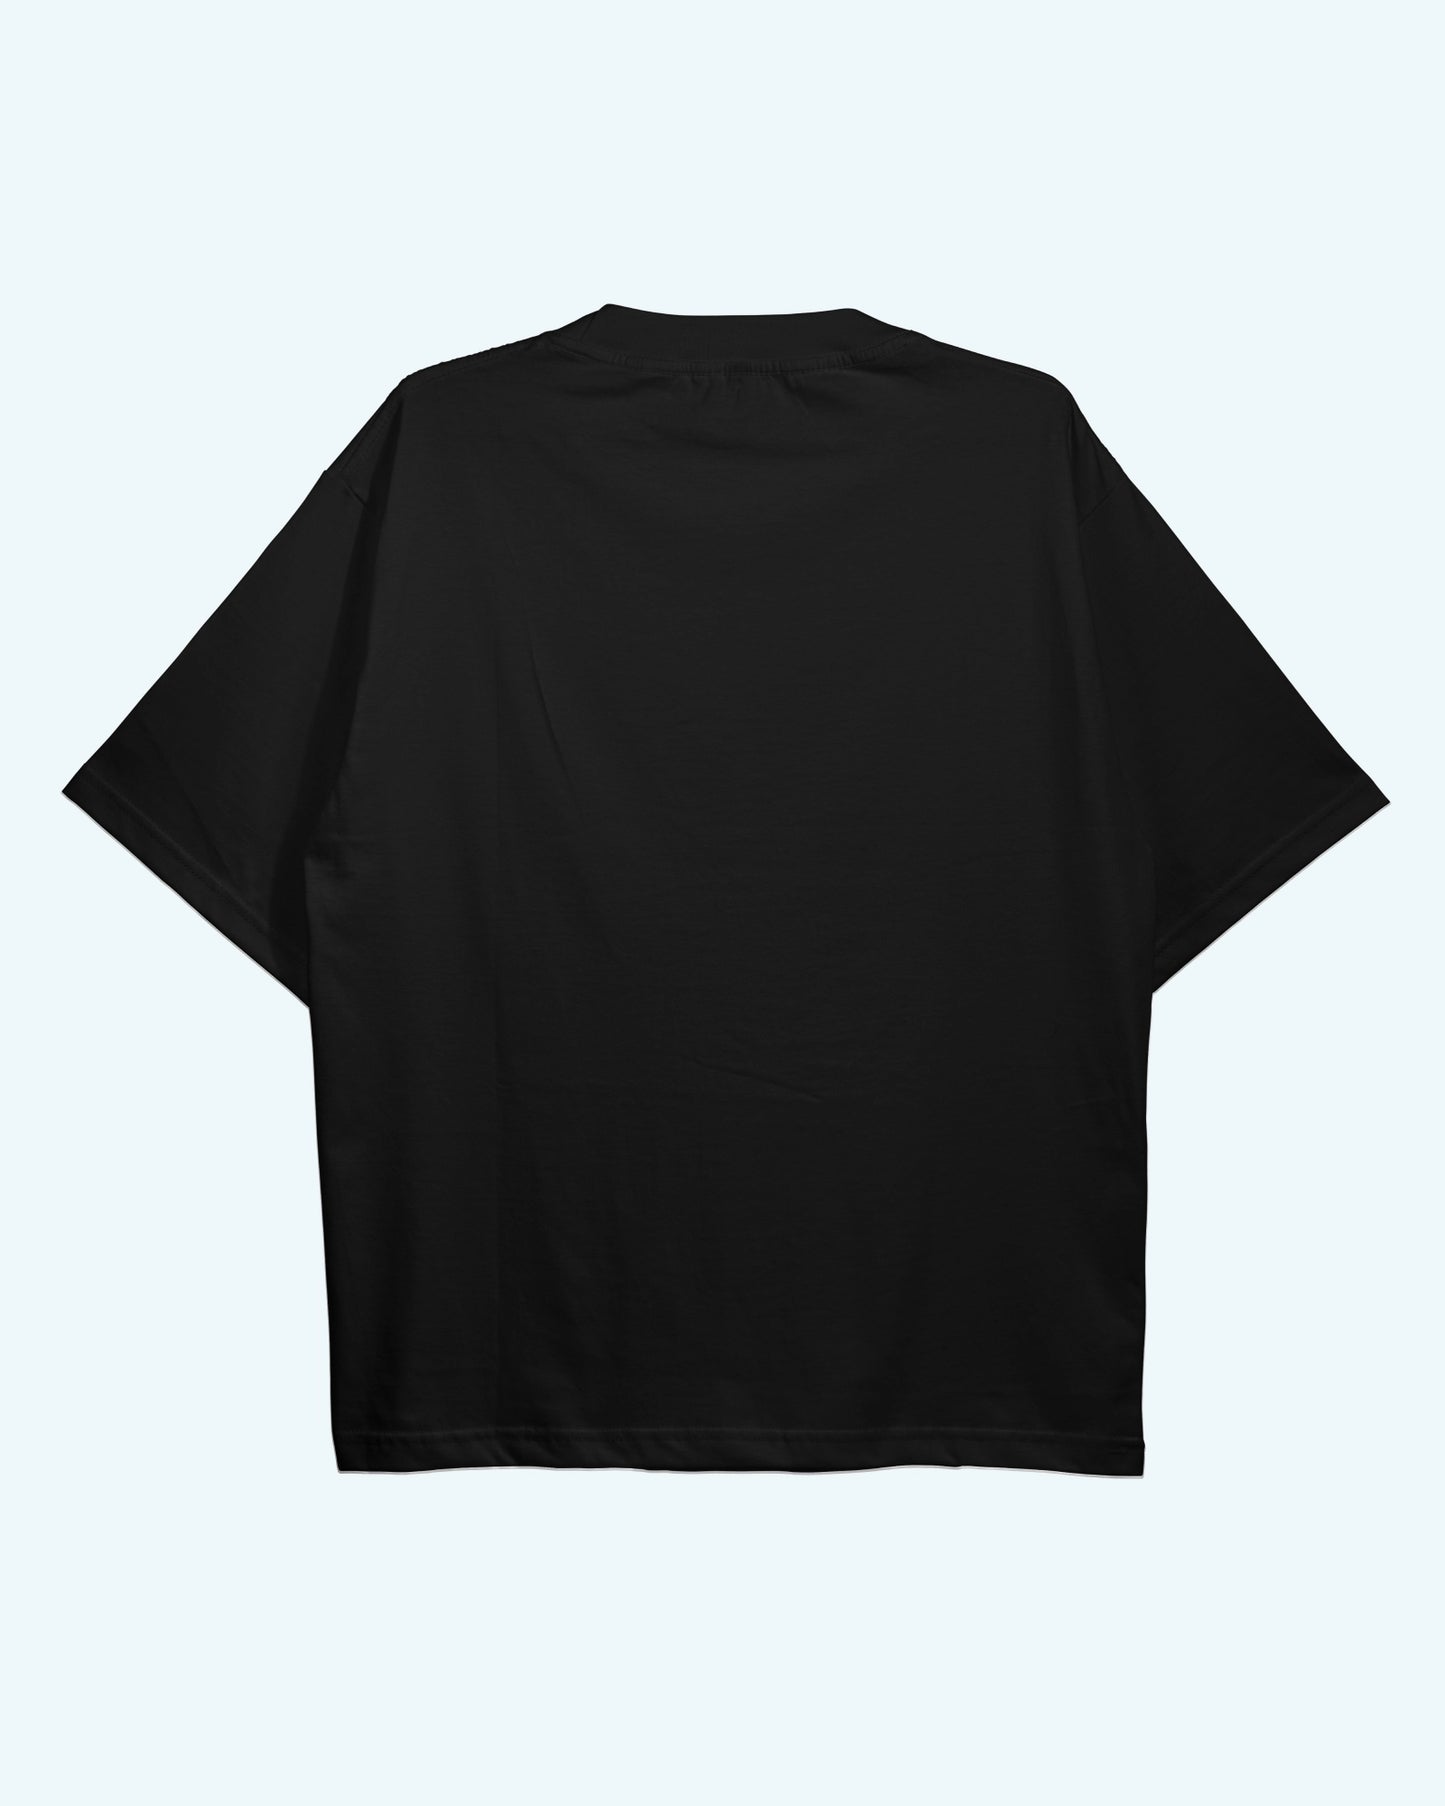 Deadwave - Oversized Unisex T-Shirt